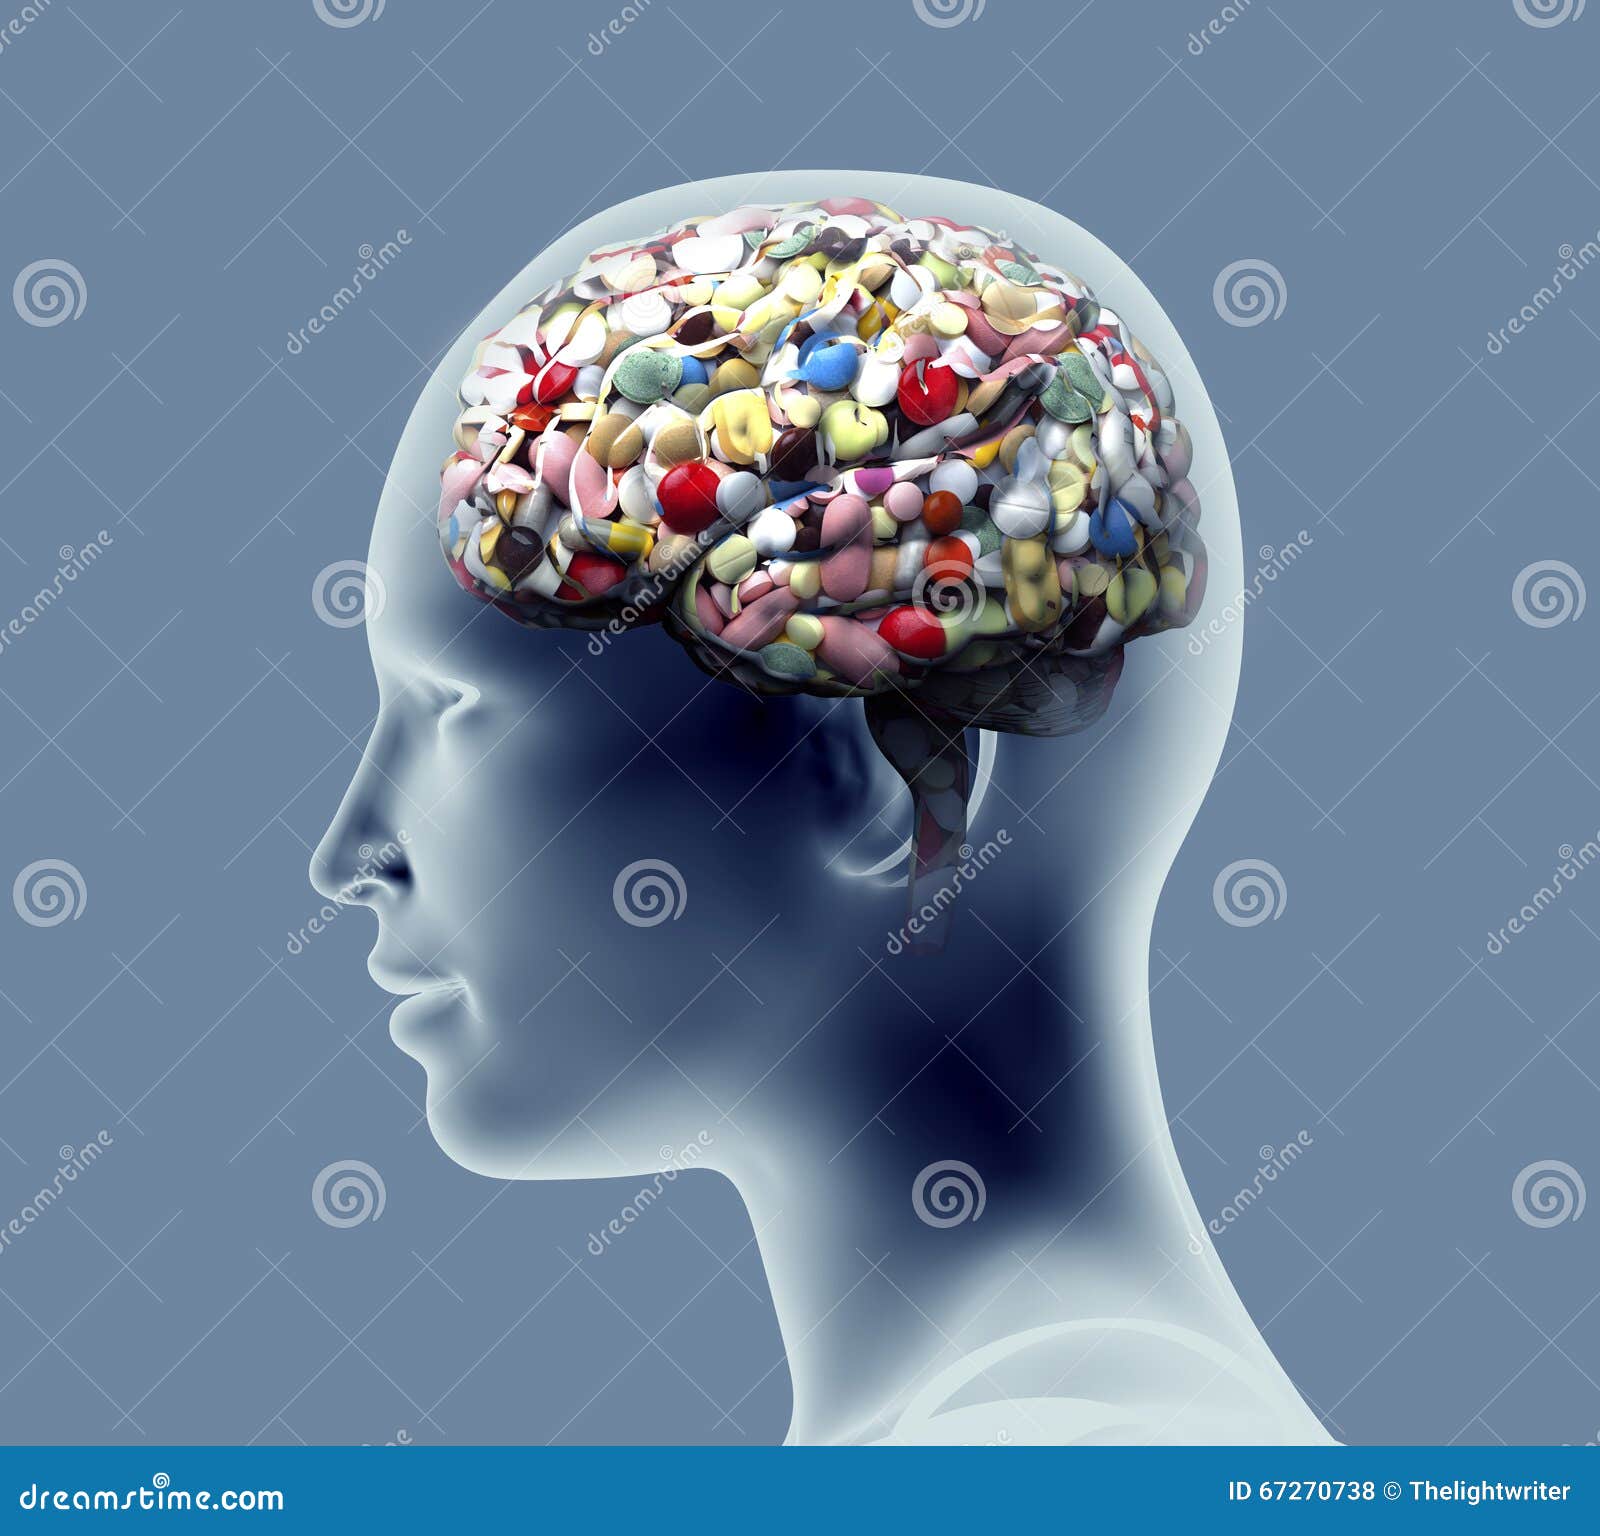 xray-human-head-pills-drugs-brain-x-ray-